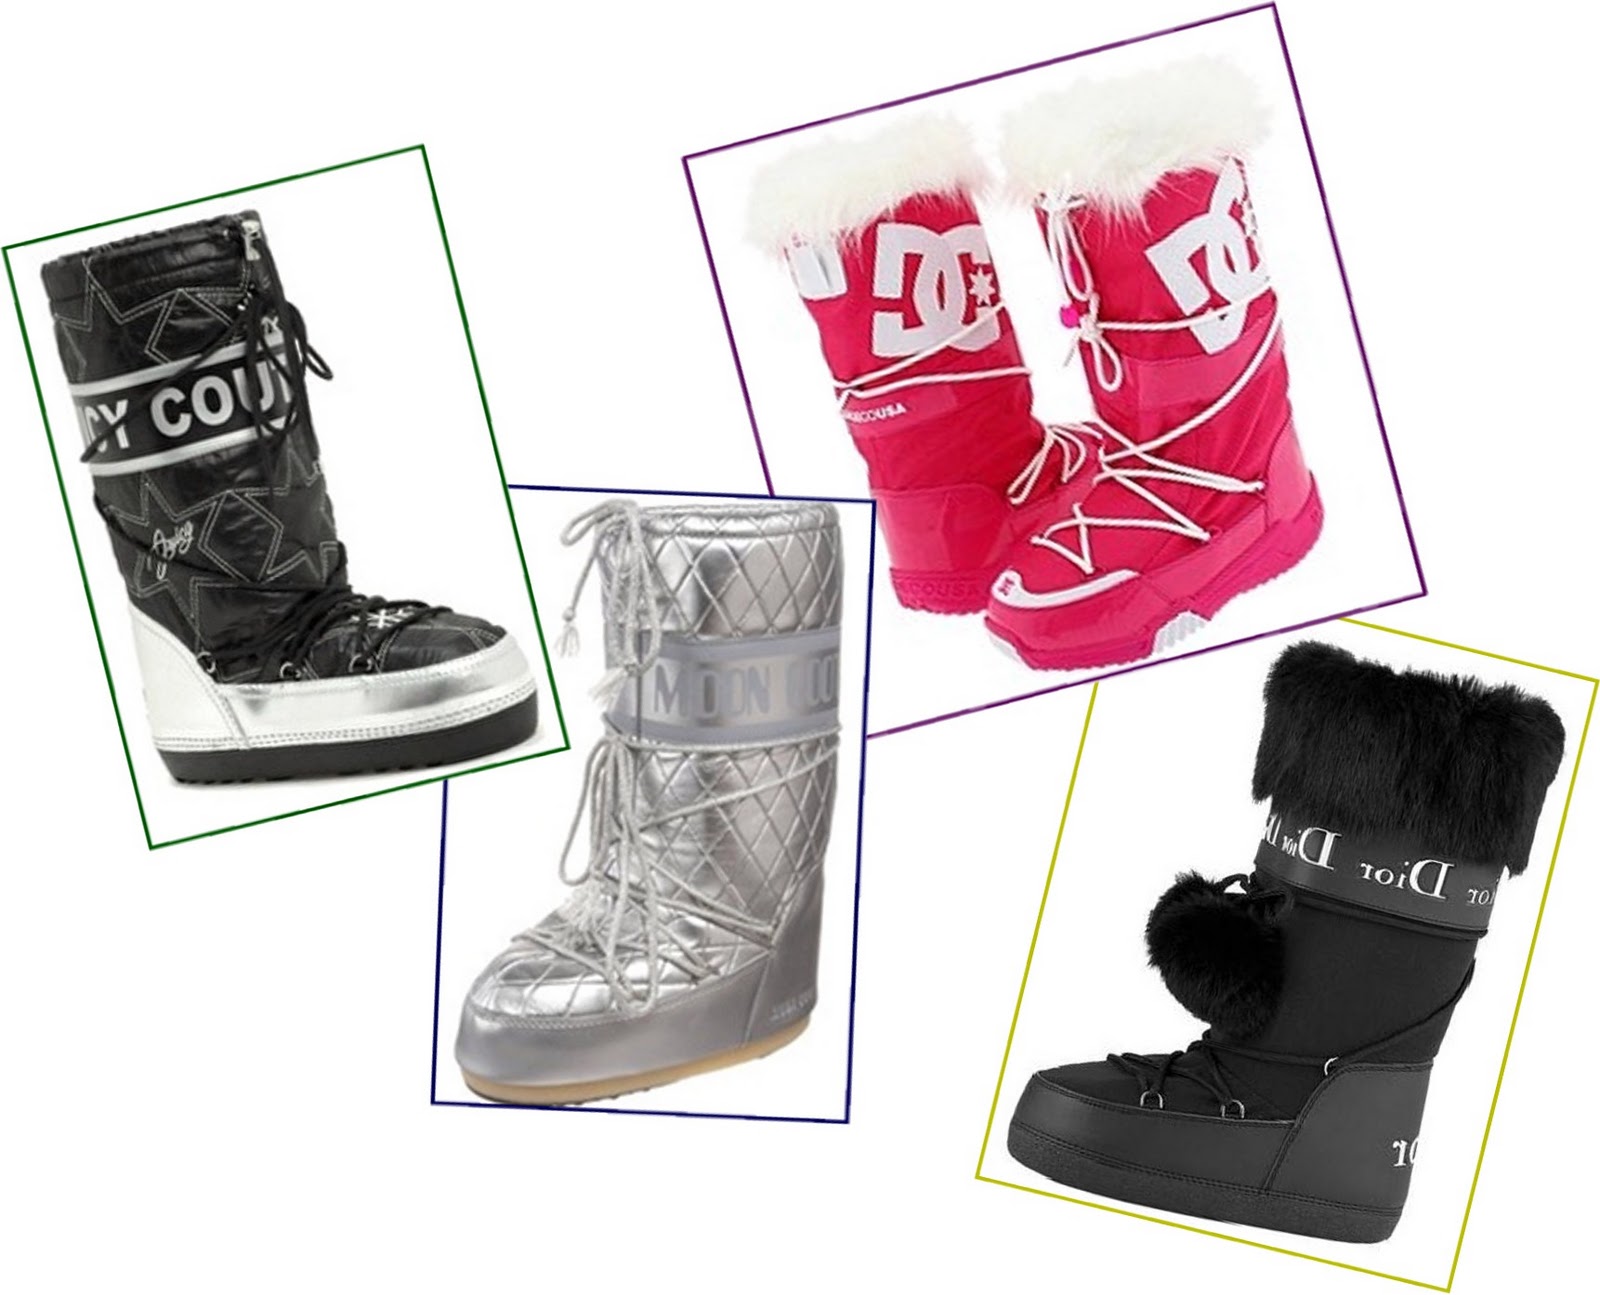 http://2.bp.blogspot.com/_DZWSQRl6Bow/TP7eTtLr6PI/AAAAAAAABls/UzULOtQhstM/s1600/snow+boots.jpg